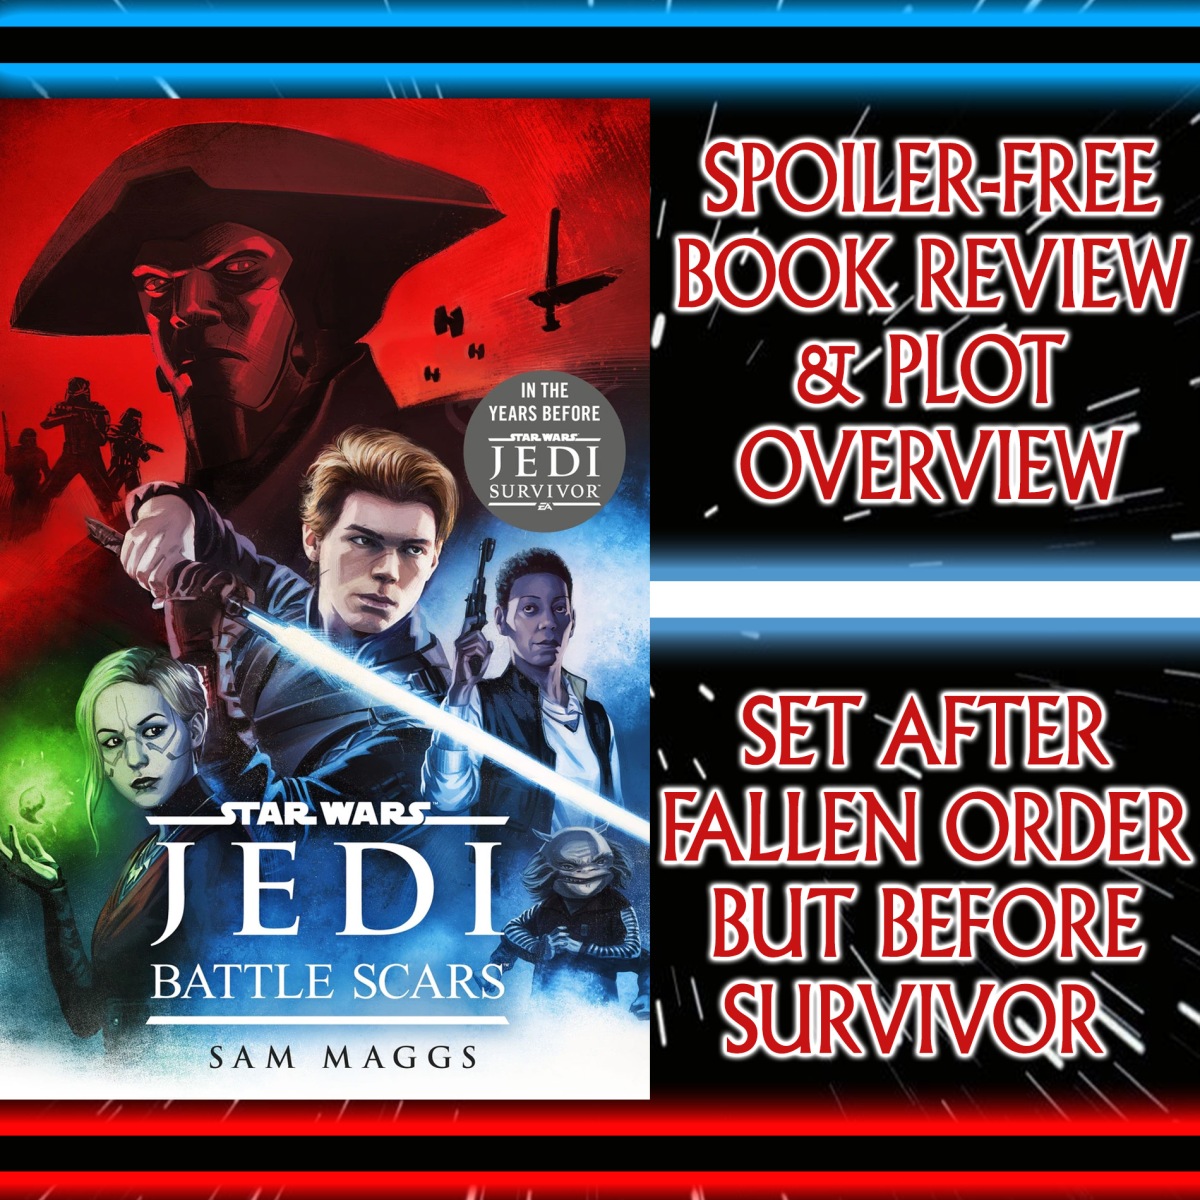 Jedi: Battle Scars By Sam Maggs, Review & Plot Overview – The Fallen Order Sequel & Survivor Prequel Novel About Cal Kestis, Merrin, Cere Junda & Greez Dritus!